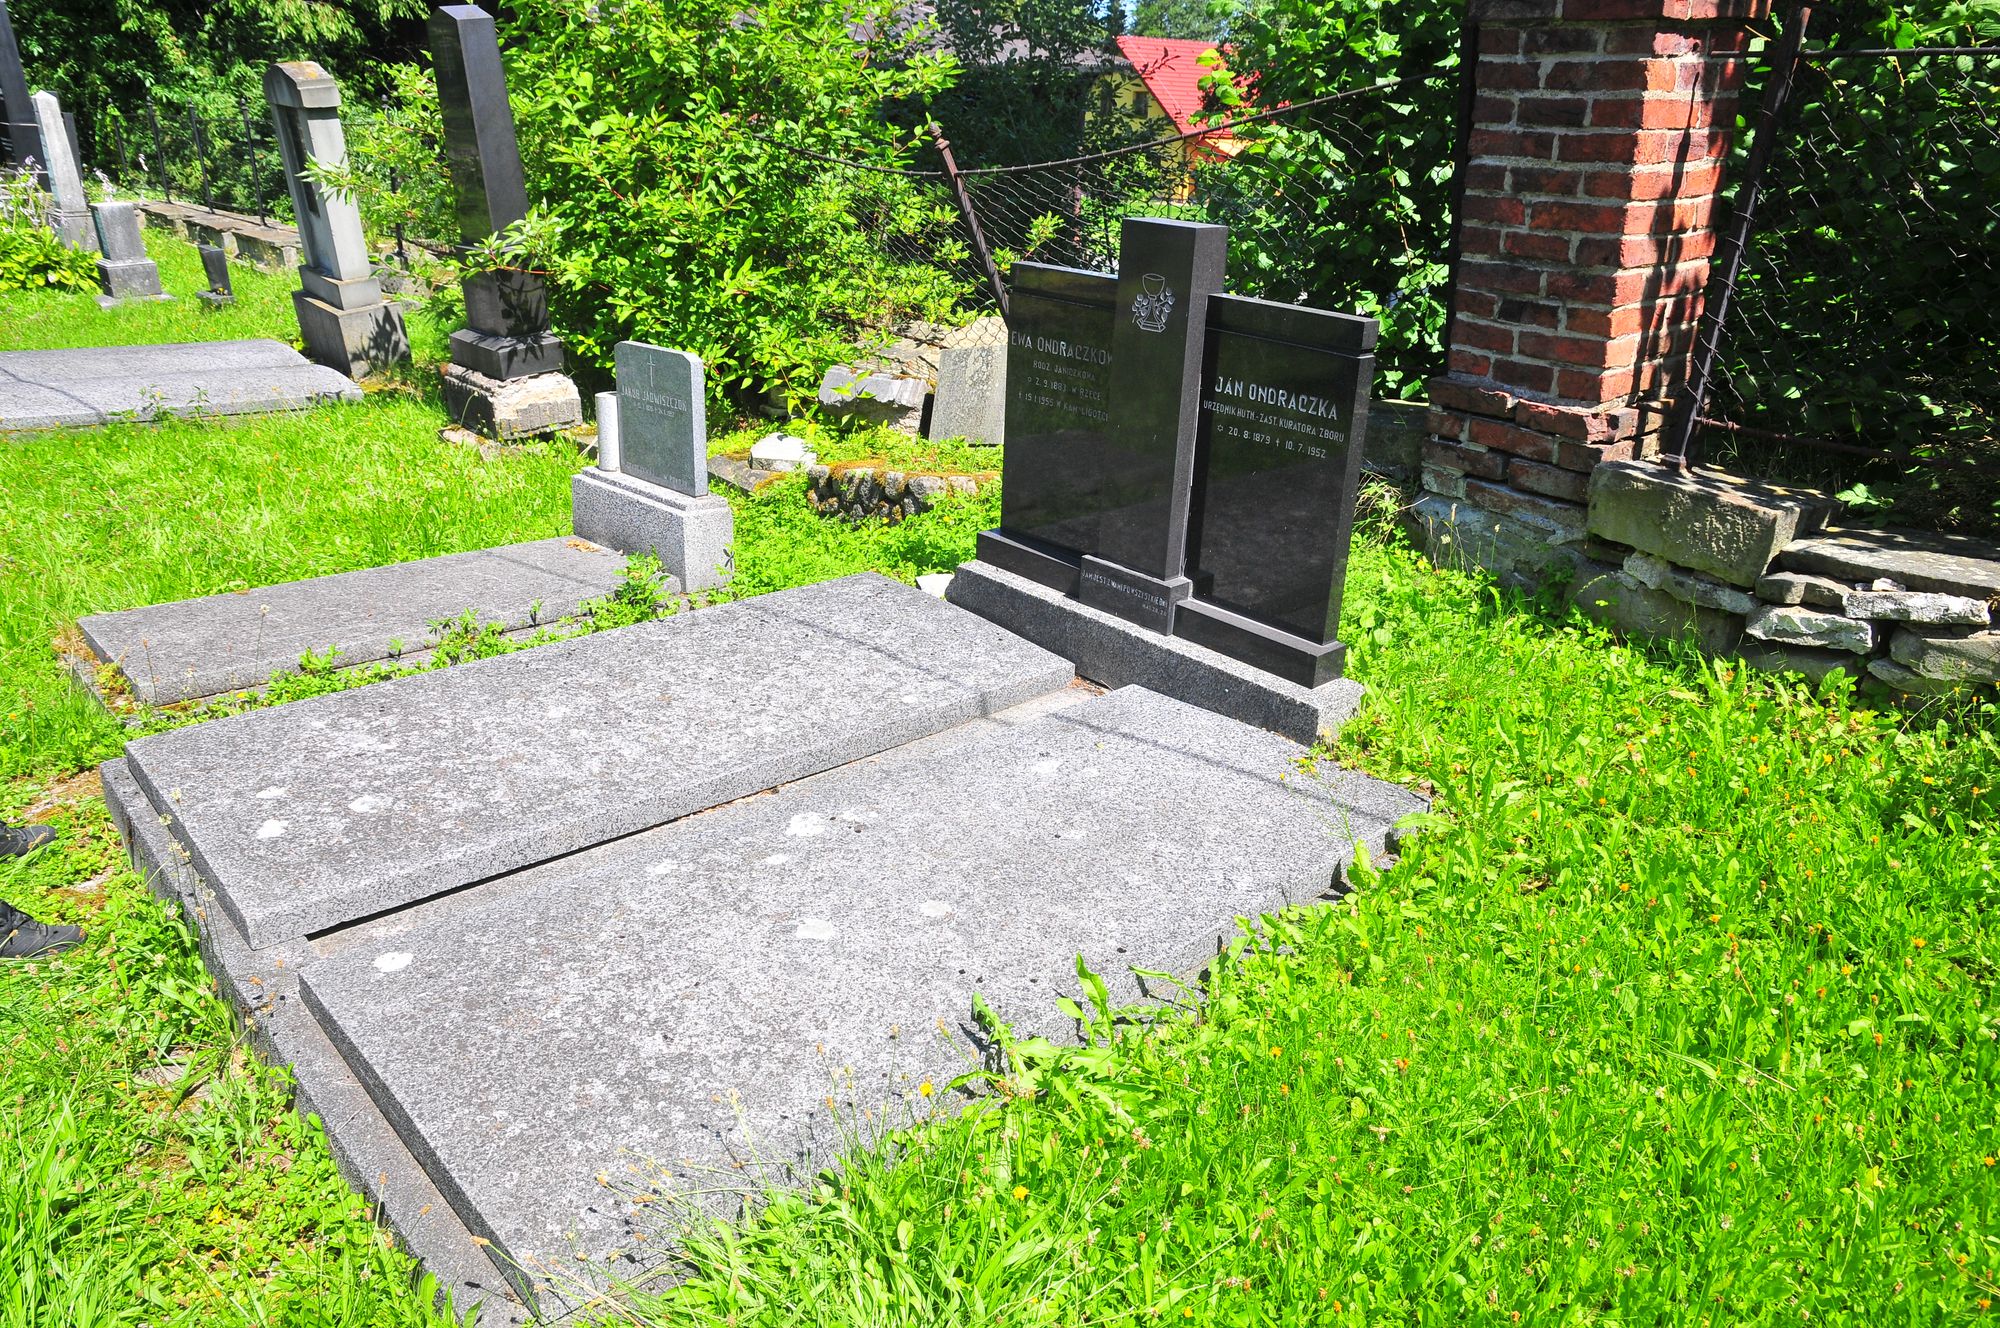 Tombstone of Ewa and Jan Ondraczek, cemetery in Ligotka Kameralna, state from 2022